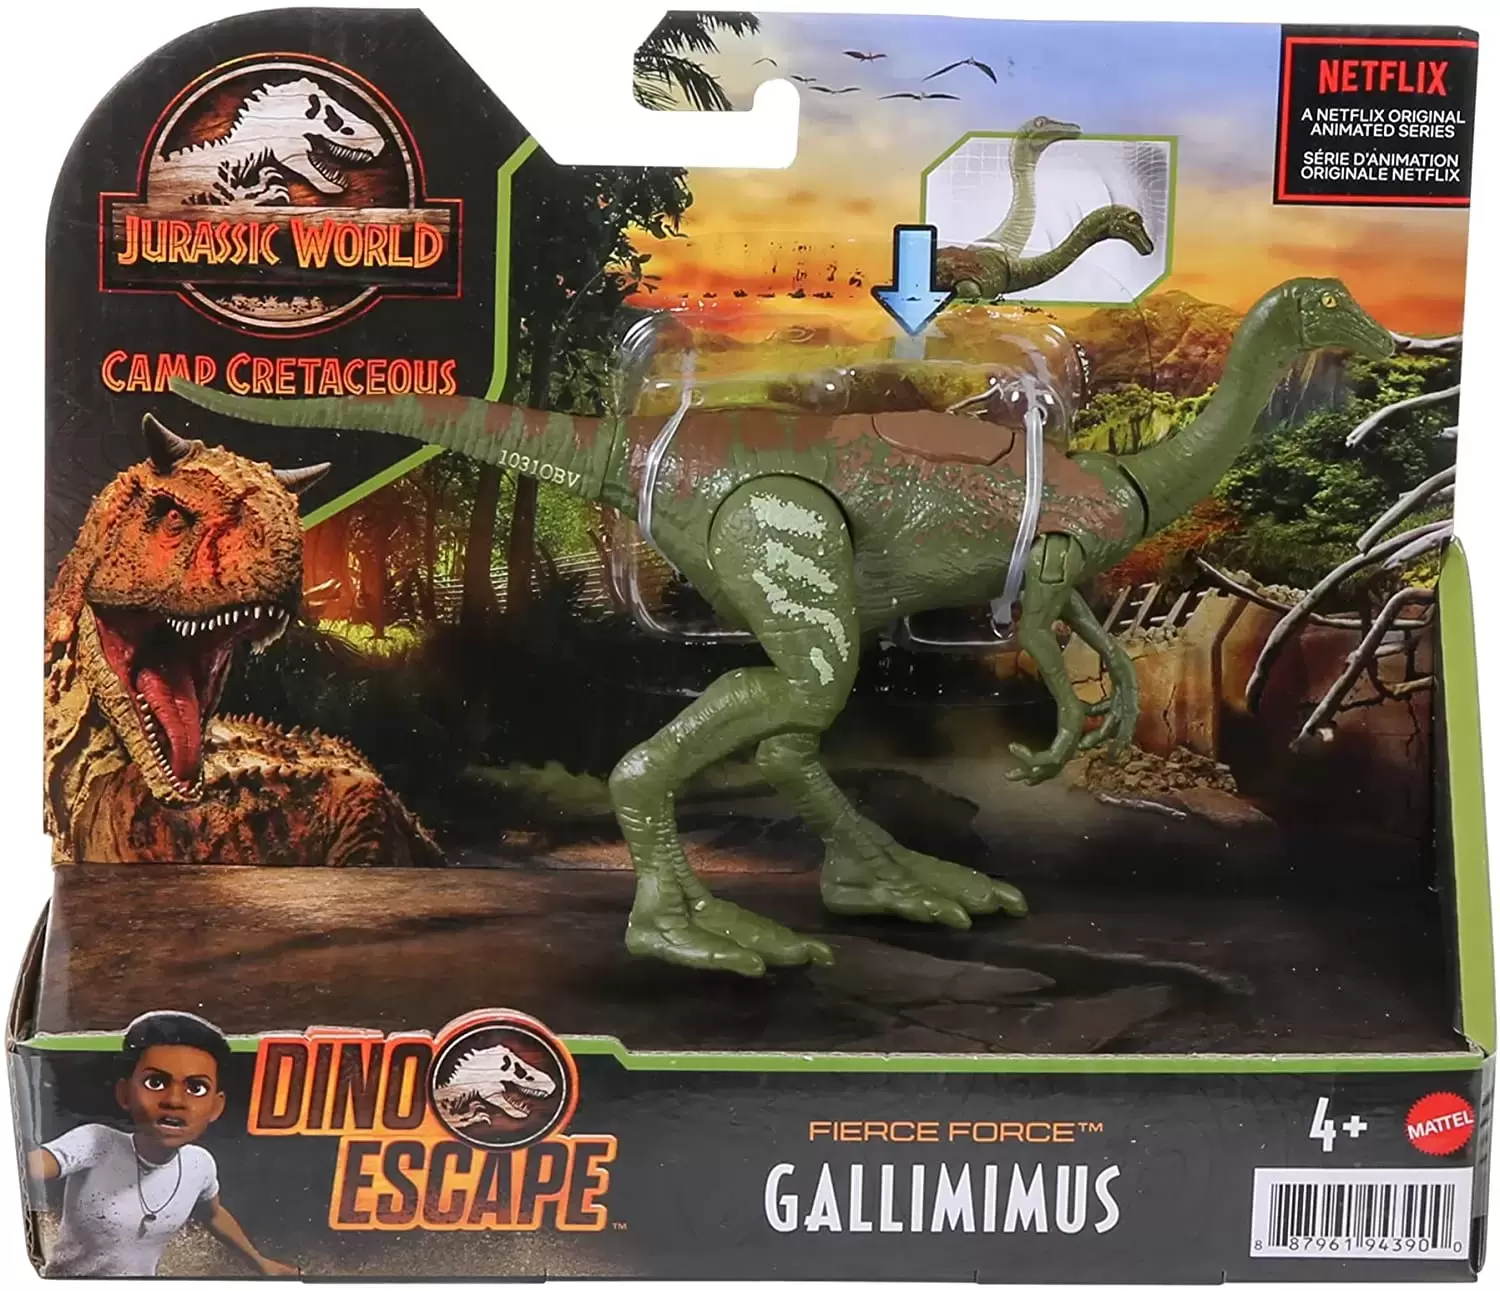 Jurassic World : Camp Cretaceous / Dino Escape - Gallimimus - Fierce Force